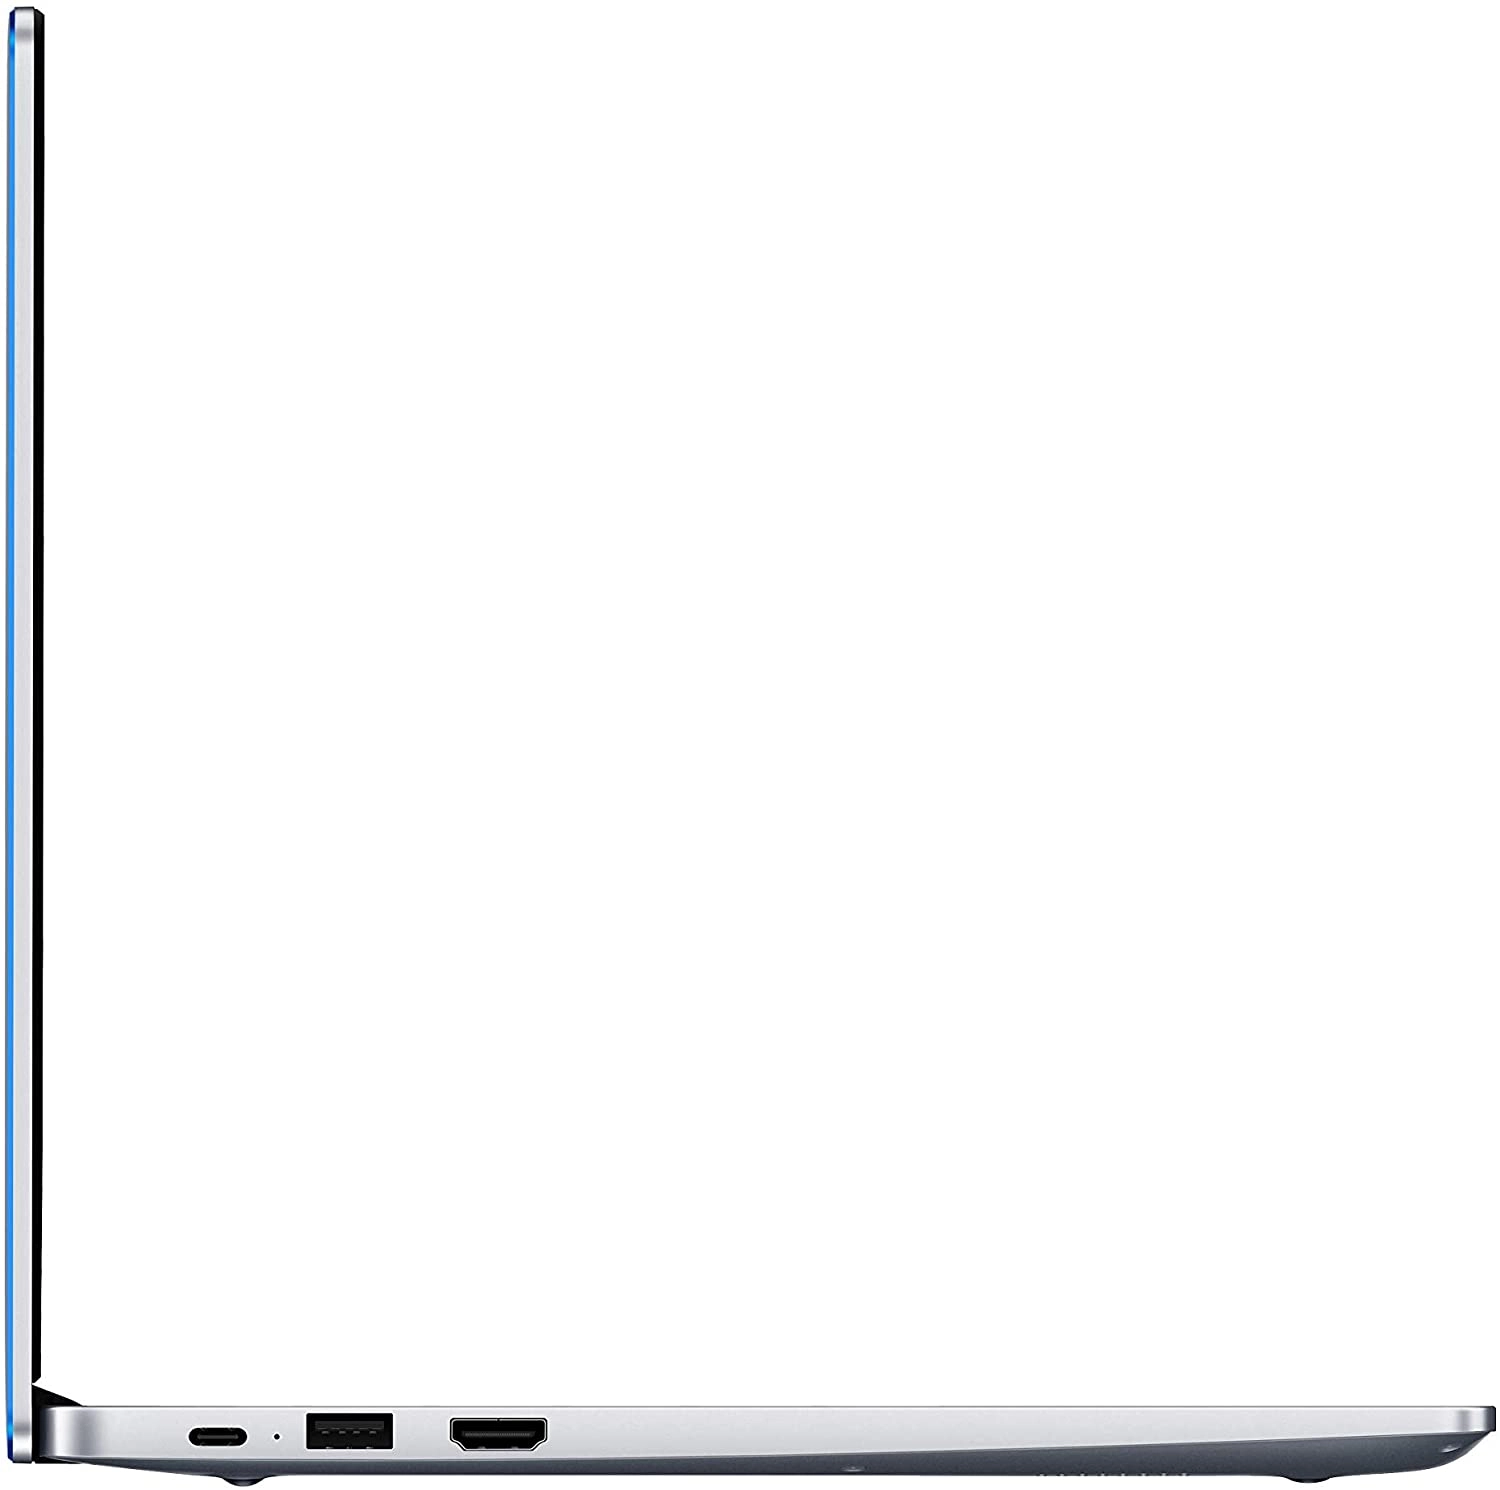 HONOR MagicBook 14 R5 3500U+8/256GB, Win 10 - Mystic Silver laptop image